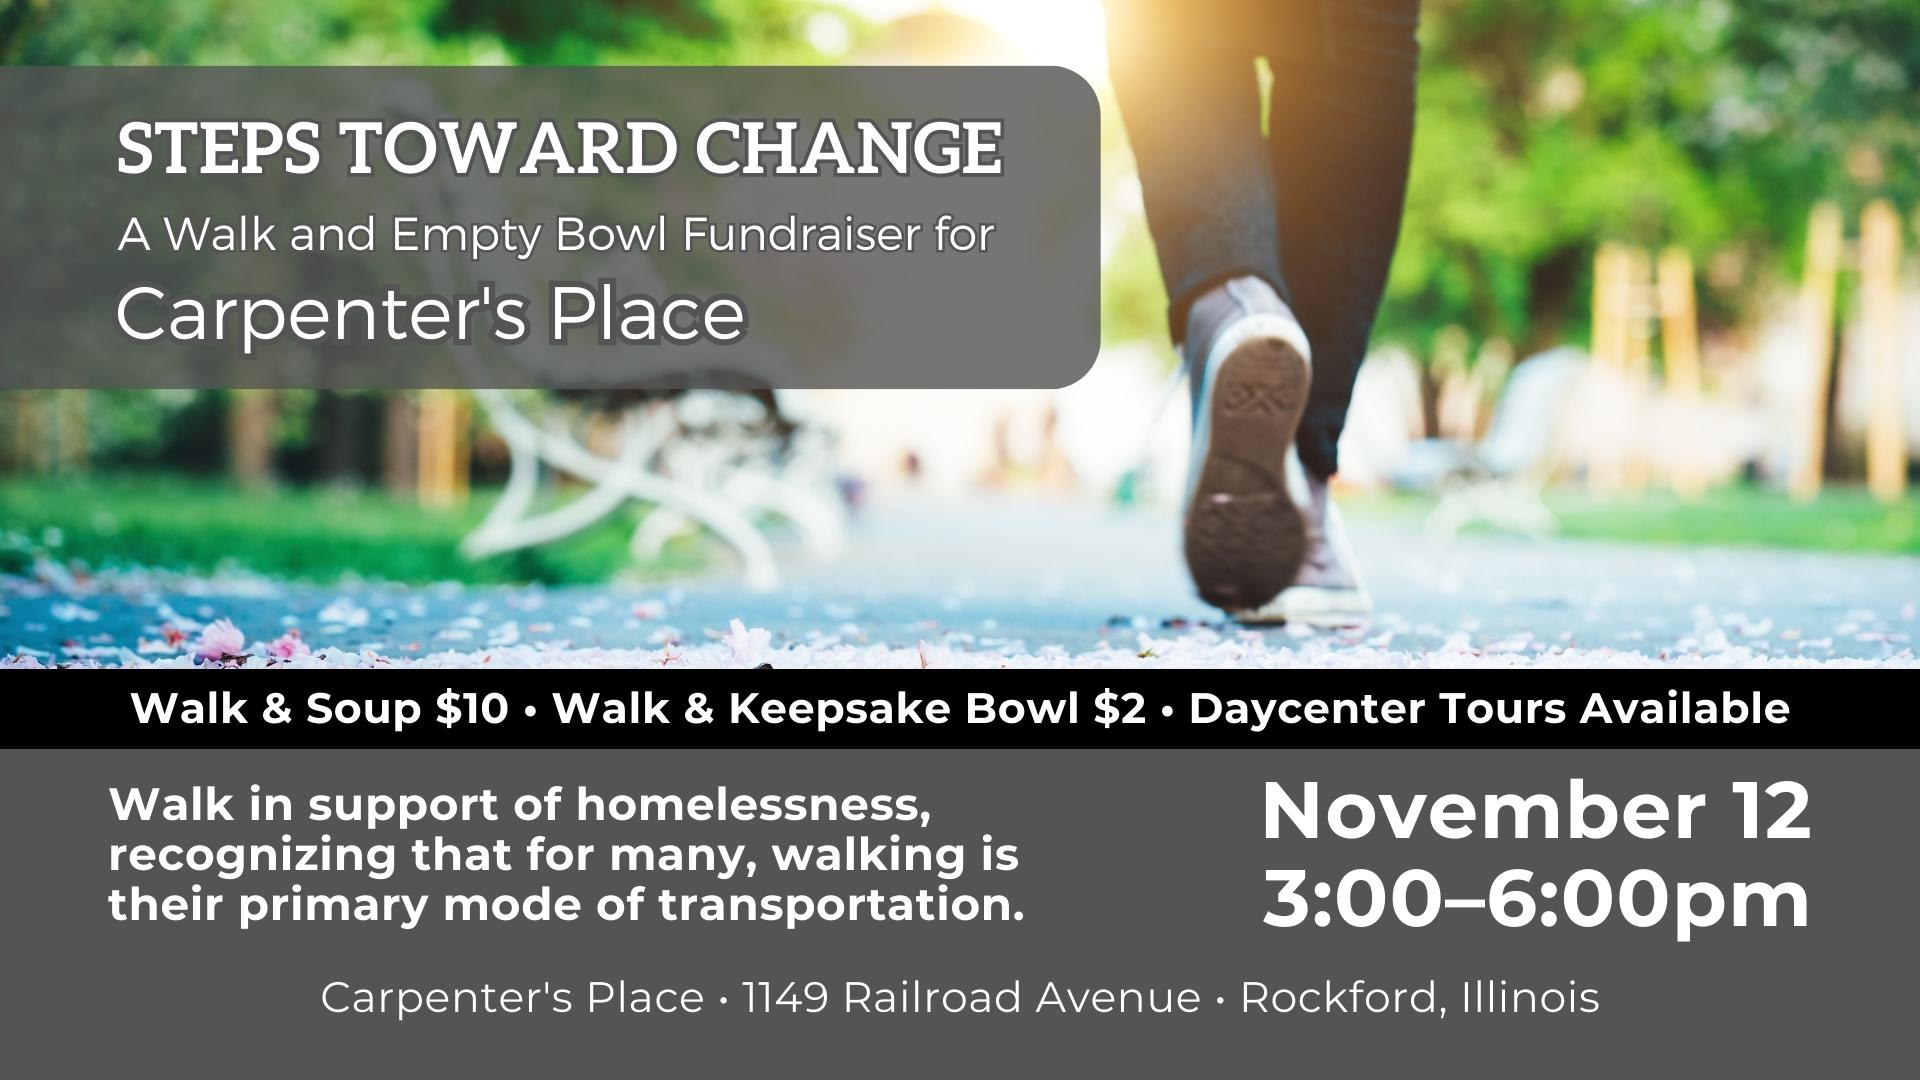 Steps Toward Change - Carpenter's Place Fundraiser